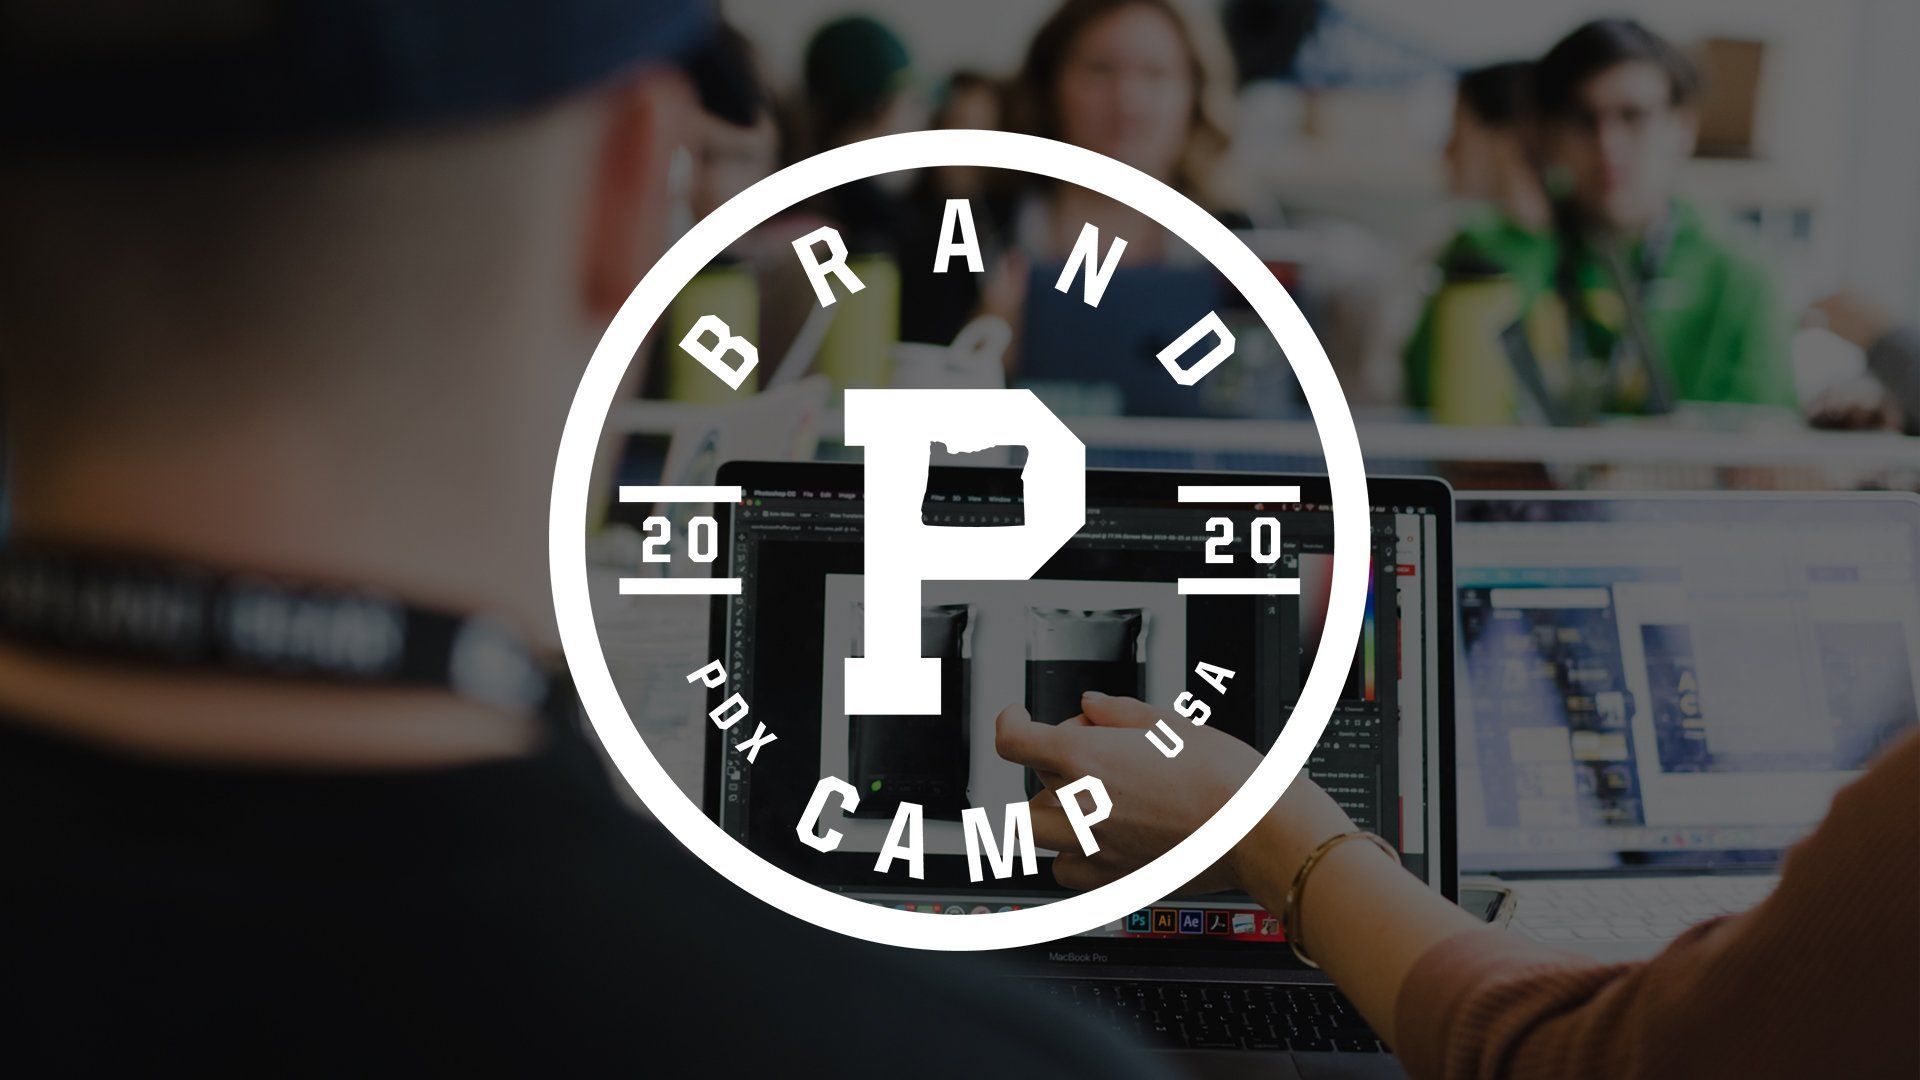 Brand Camp 2020 | APPLY NOW! - Portland Gear